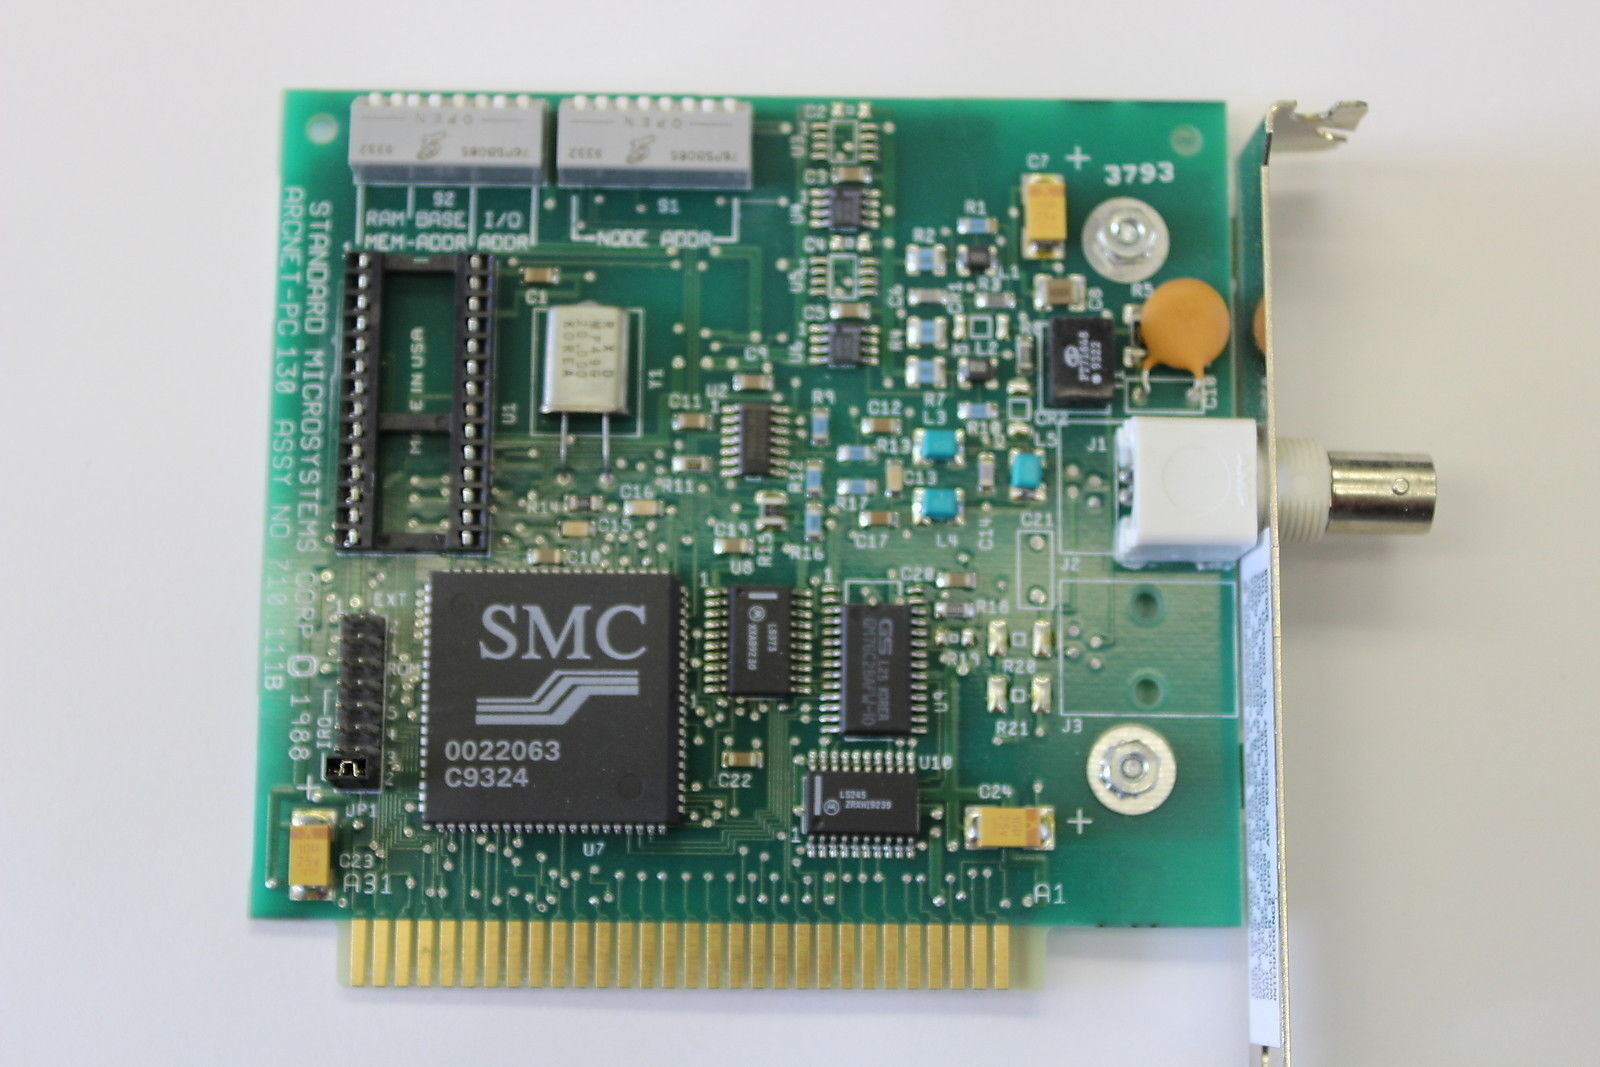 SMC PC130 750.111 Arcnet ISA Coax Adapter with Warranty